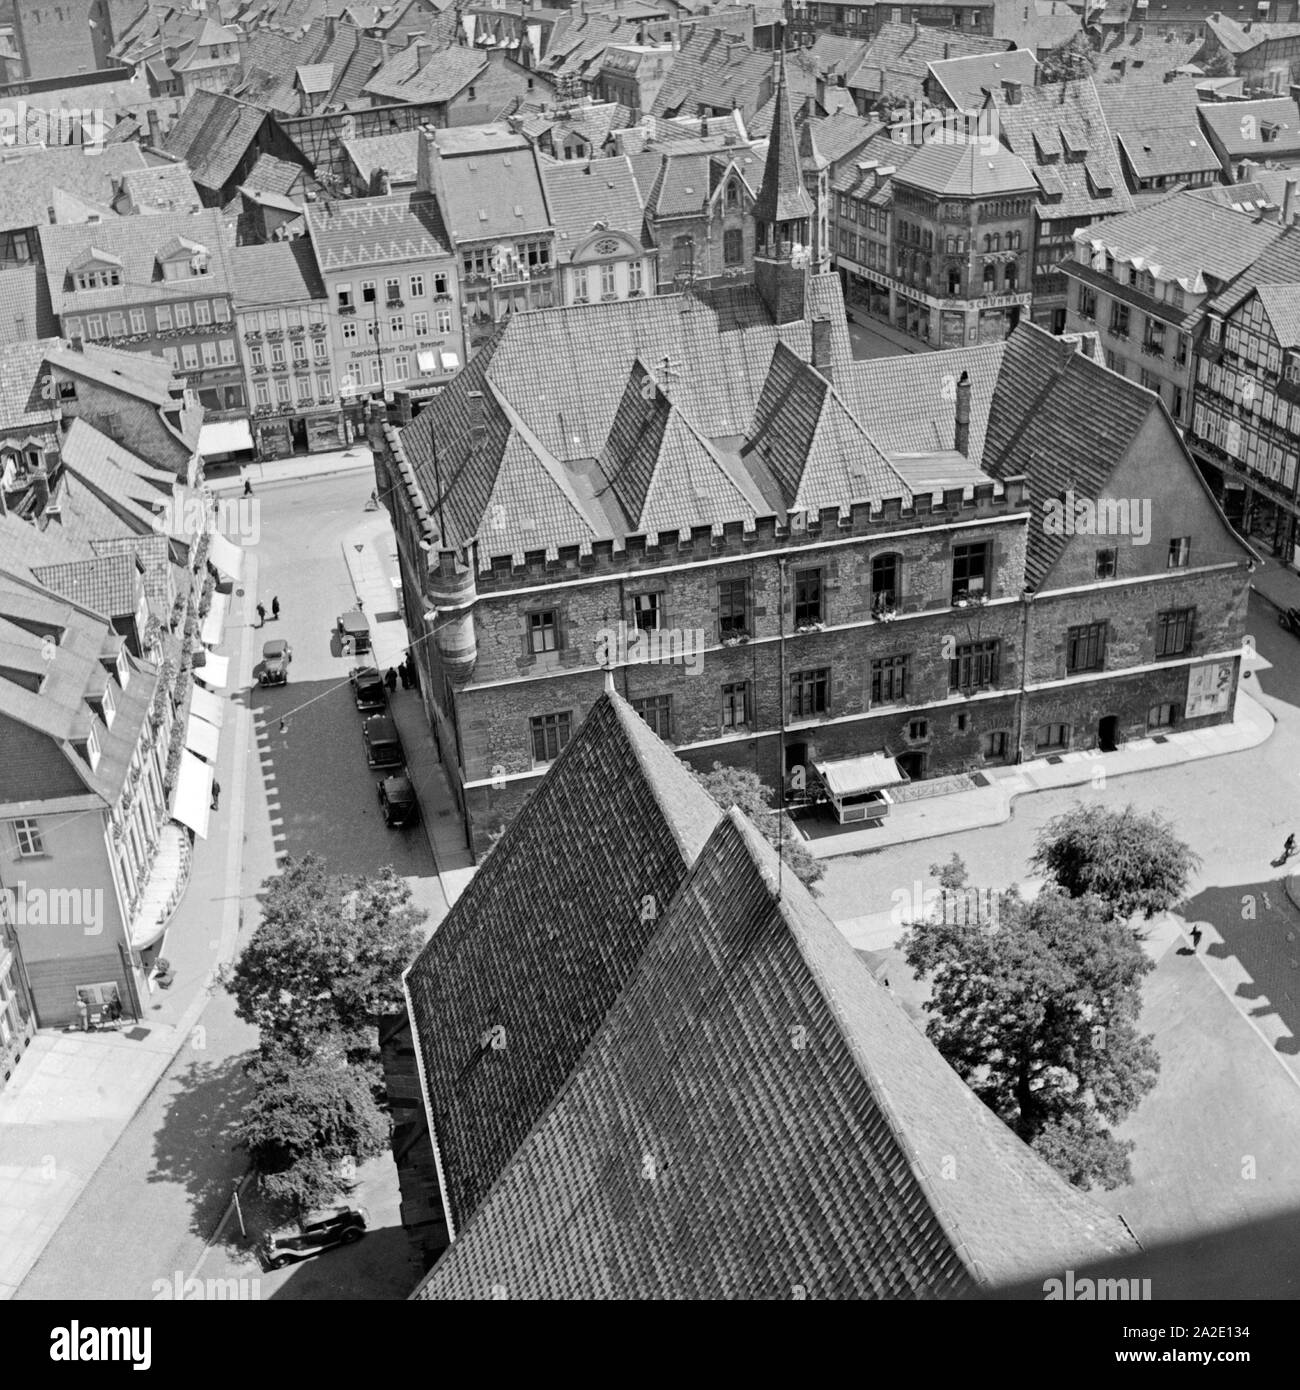 Blick auf das alte Rathaus in der Altstadt von Göttingen, Deutschland 1930er Jahre. Vista aerea per il vecchio municipio e la vecchia città di Goettingen, Germania 1930s. Foto Stock